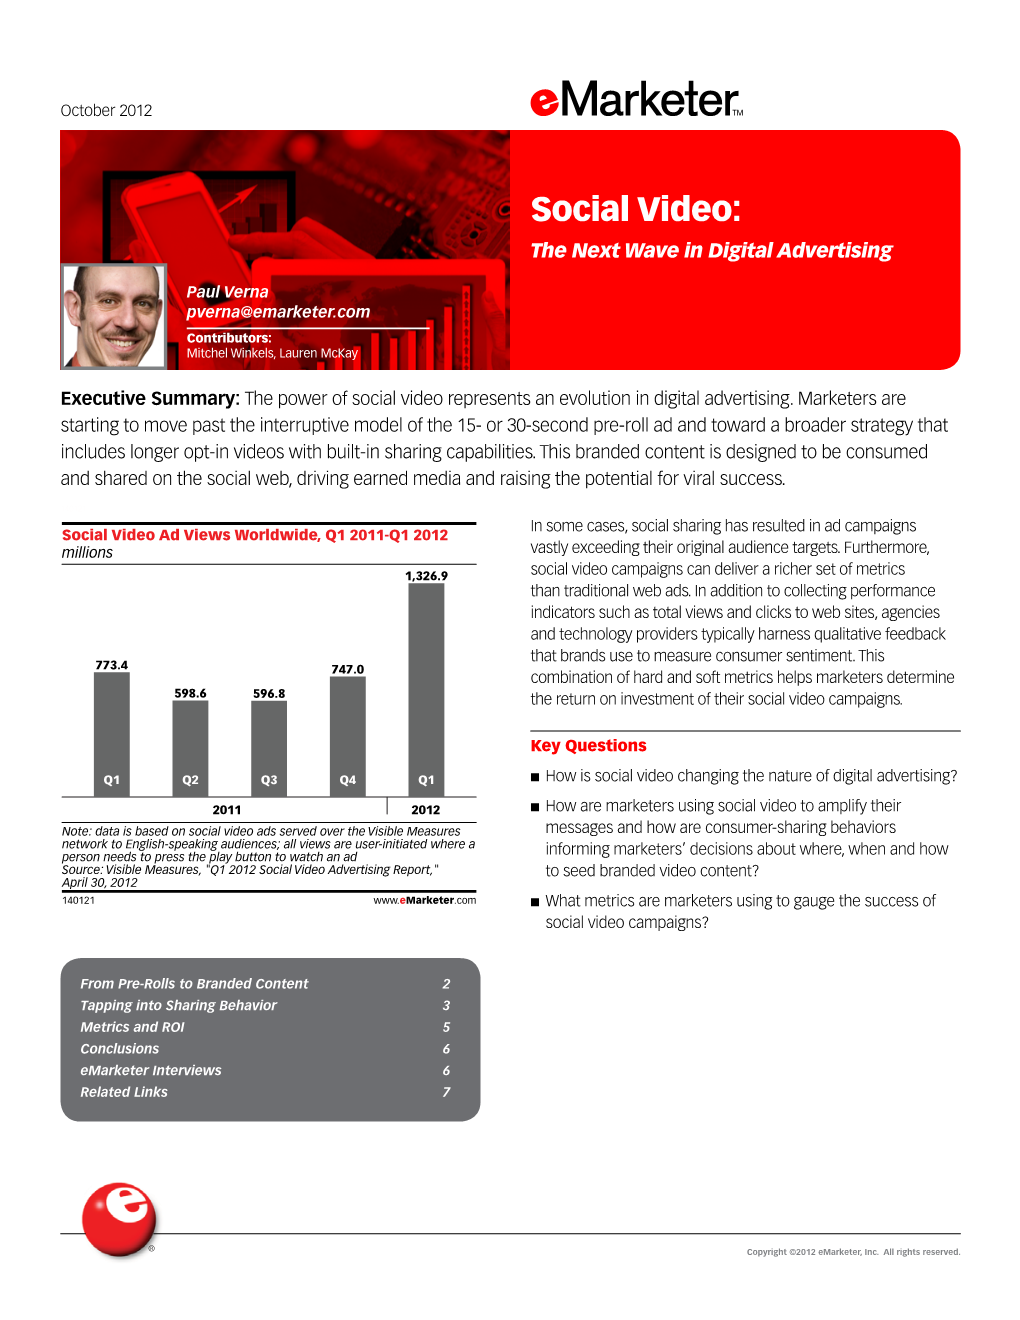 Social Video: the Next Wave in Digital Advertising, October 2012